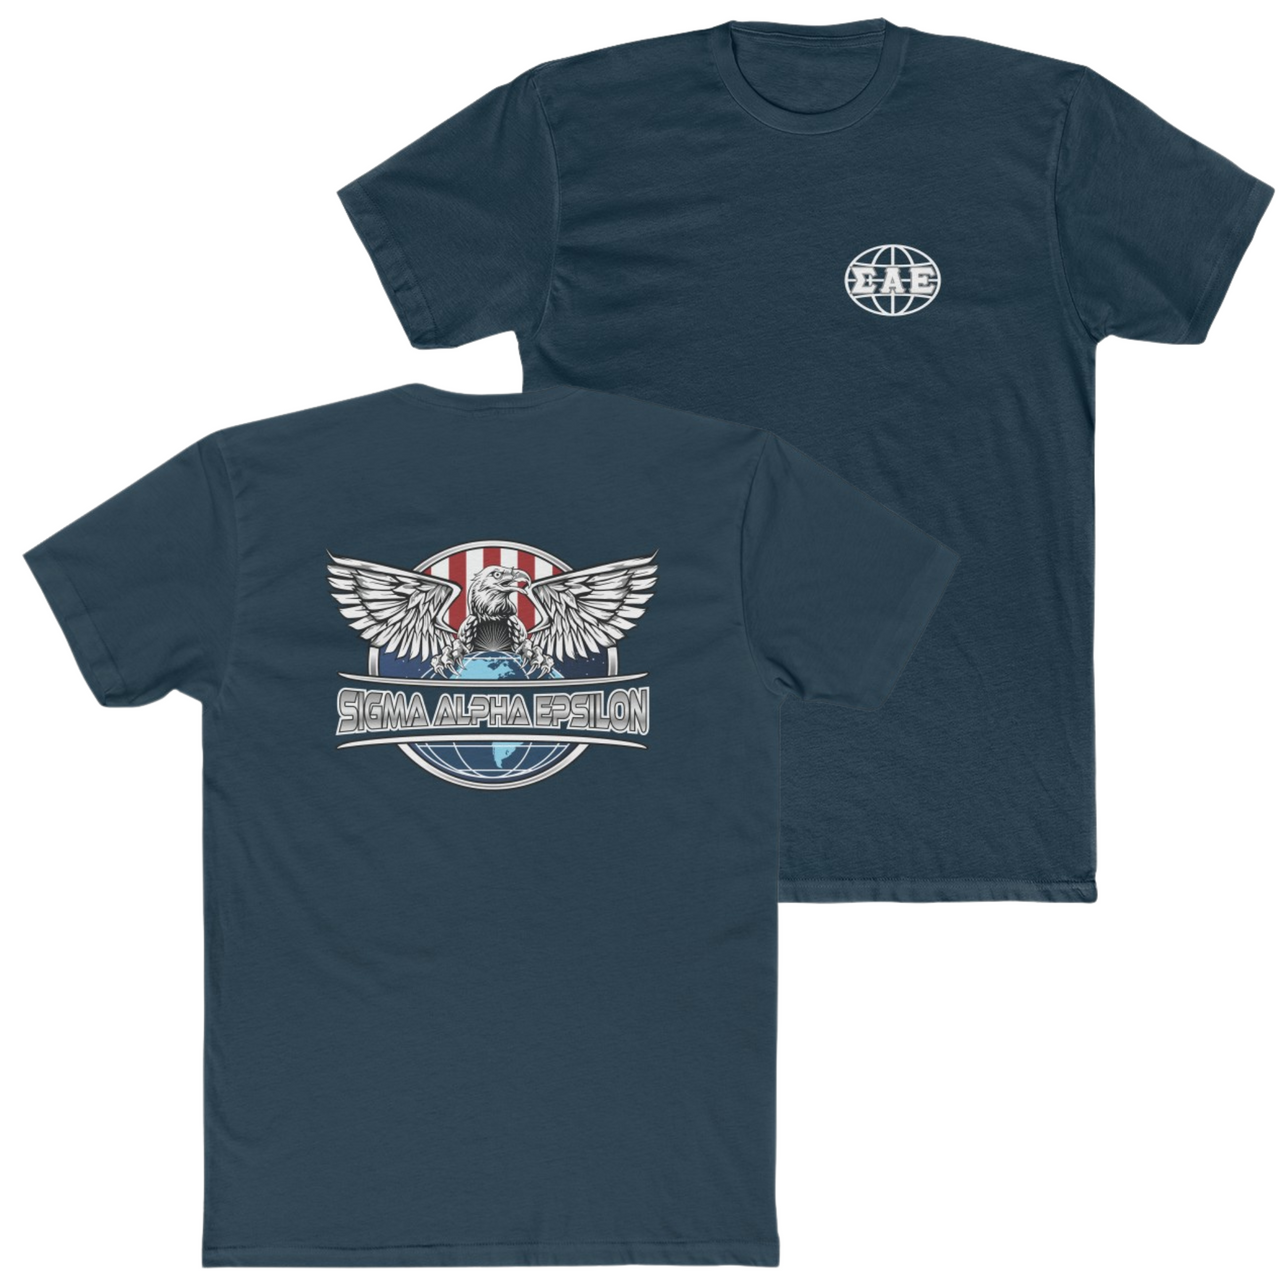 Navy Sigma Alpha Epsilon Graphic T-Shirt | The Fraternal Order | Sigma Alpha Epsilon Clothing and Merchandise